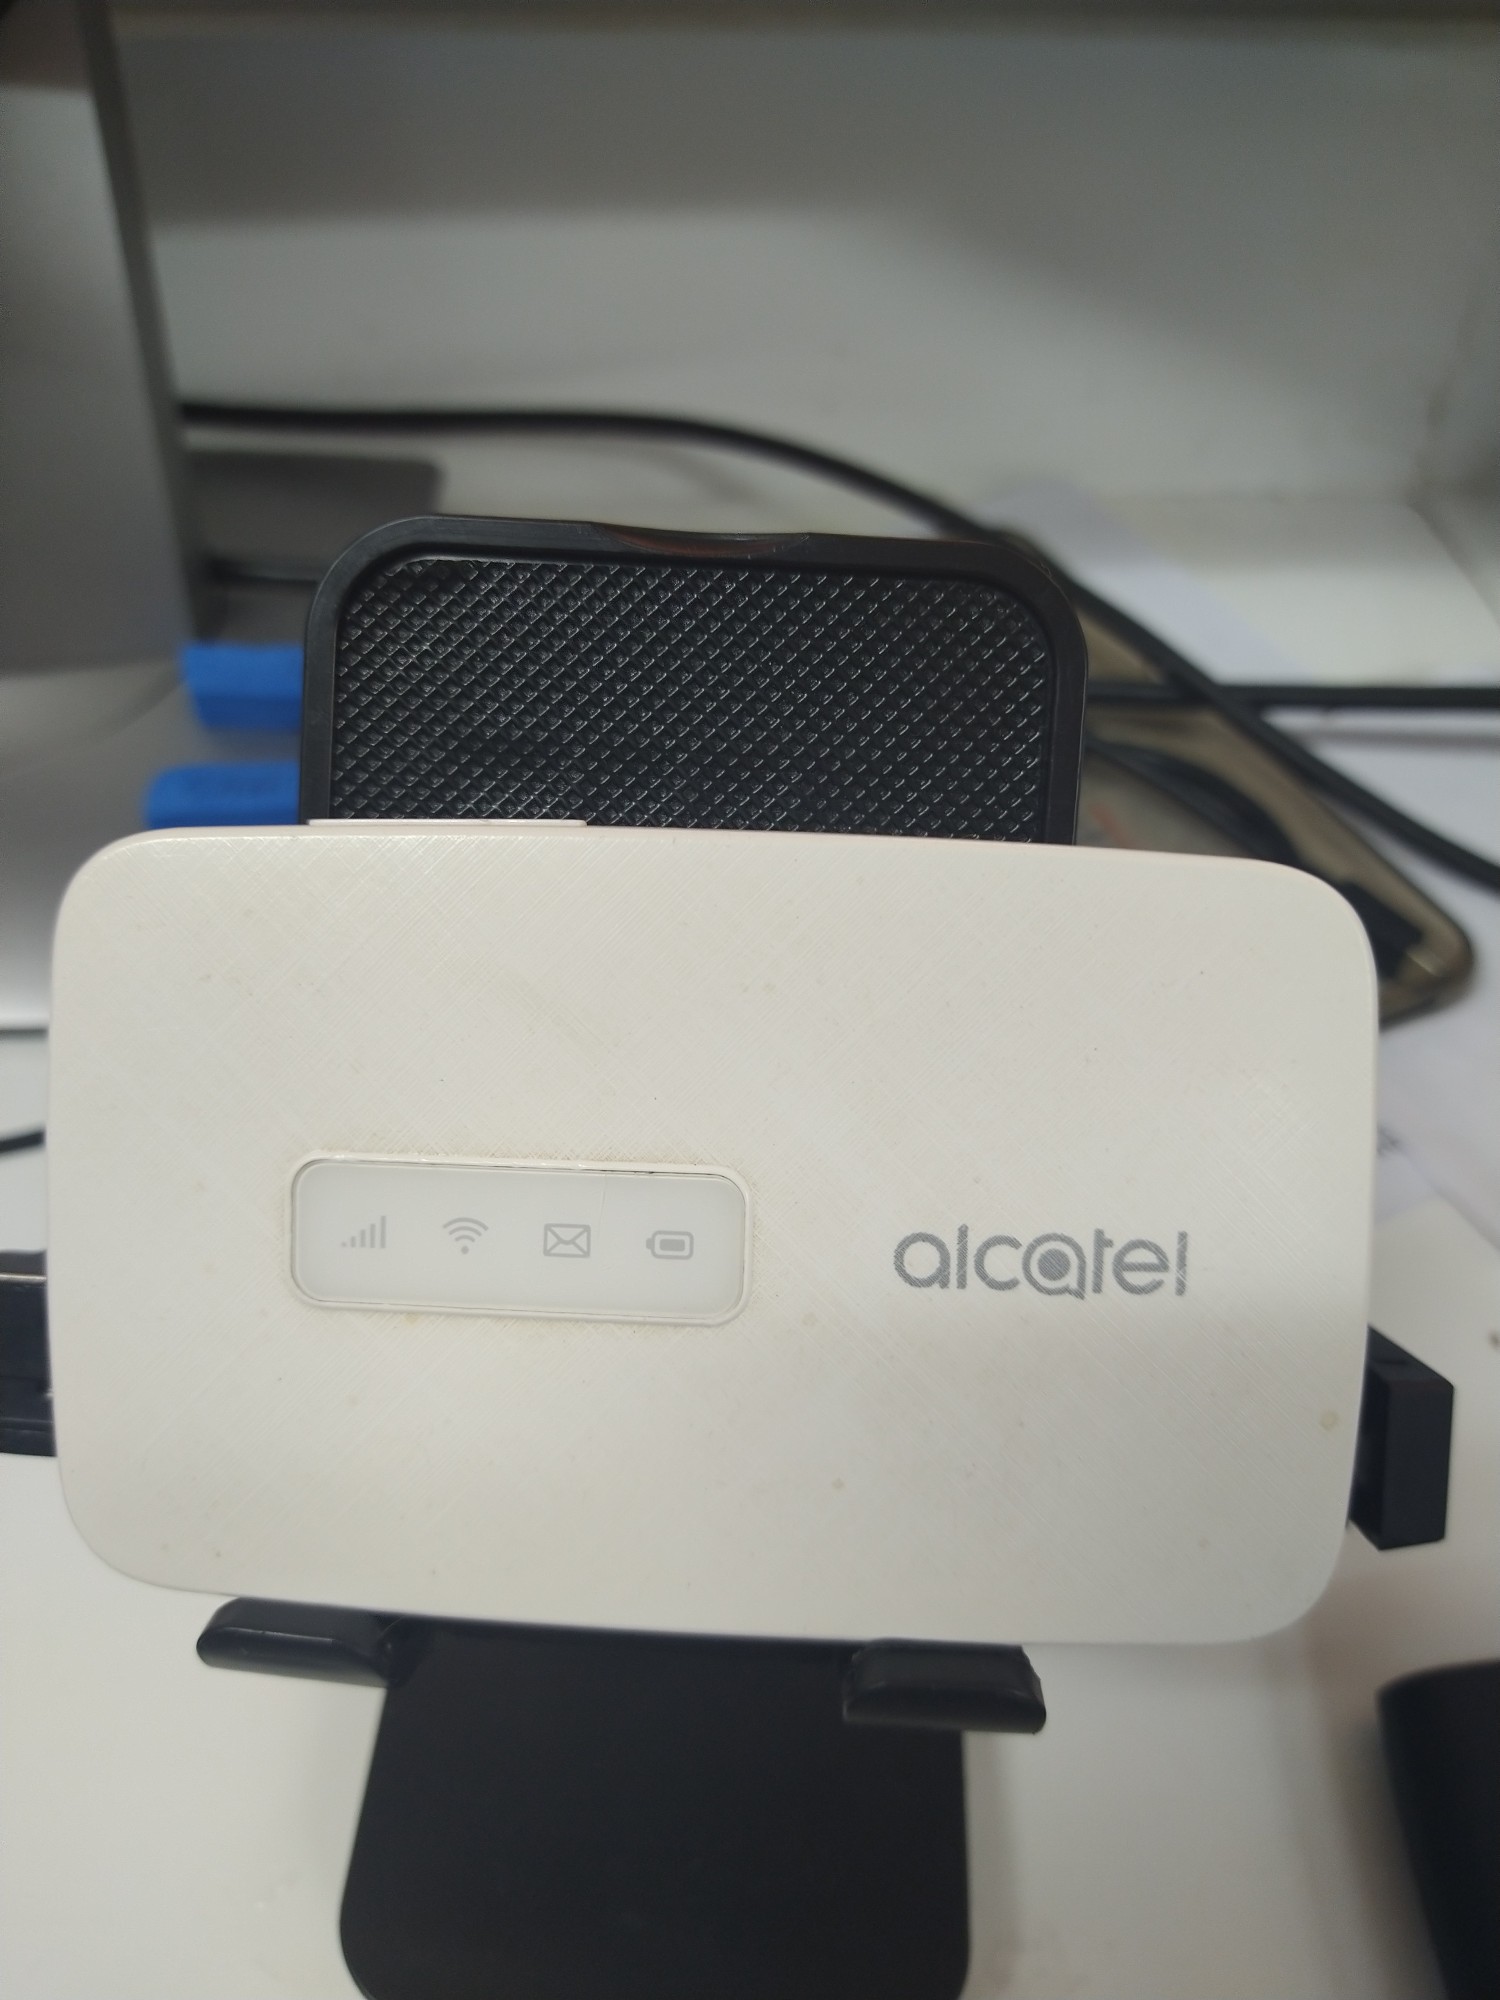 computadoras y laptops - Módem portátil Alcatel para Altice 4g LTE